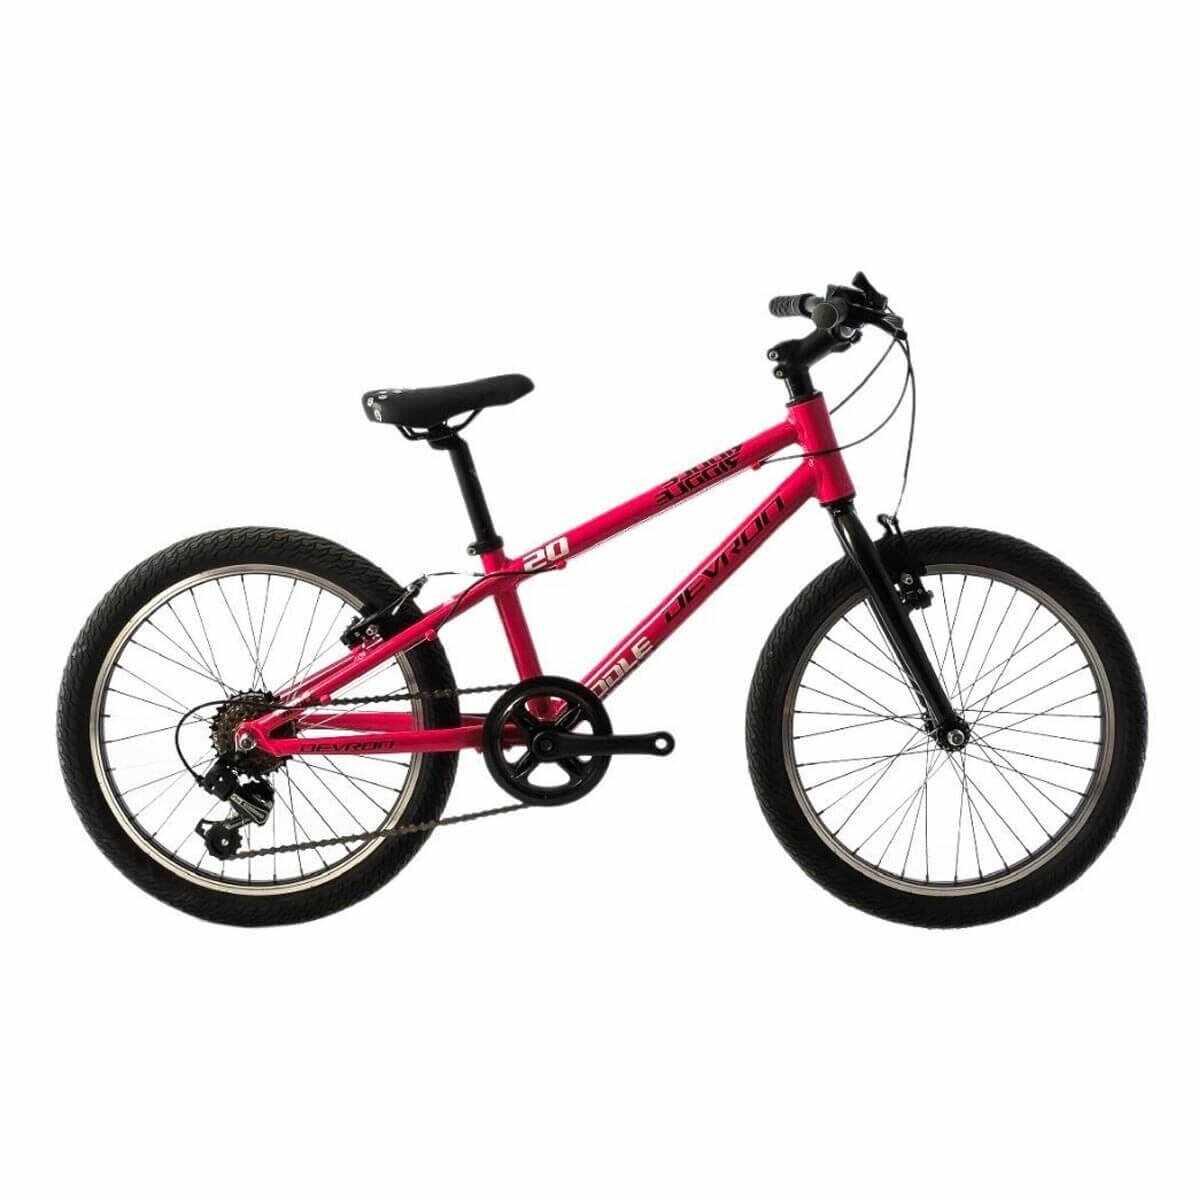 Bicicleta Copii Devron Riddle K1.2 2019 - 20 Inch, Roz